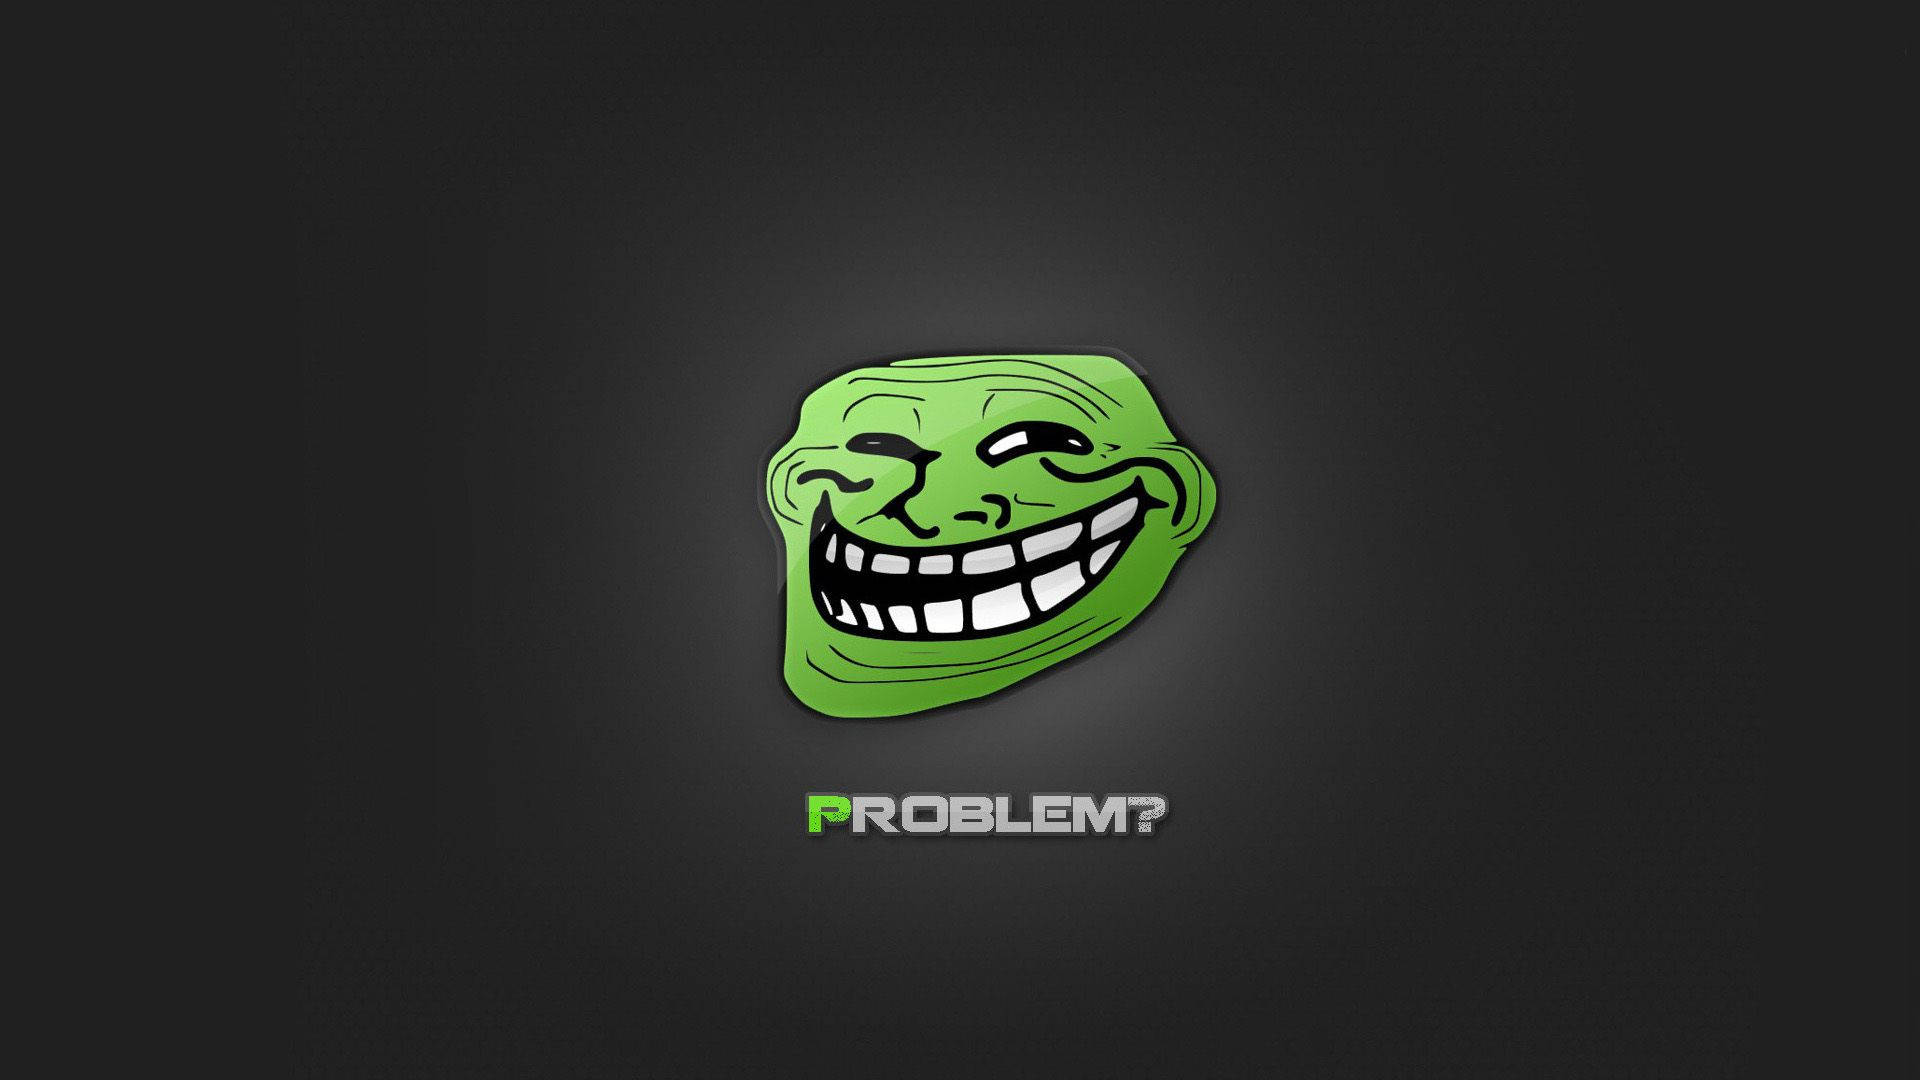 Problem Troll Face Funny Meme Background